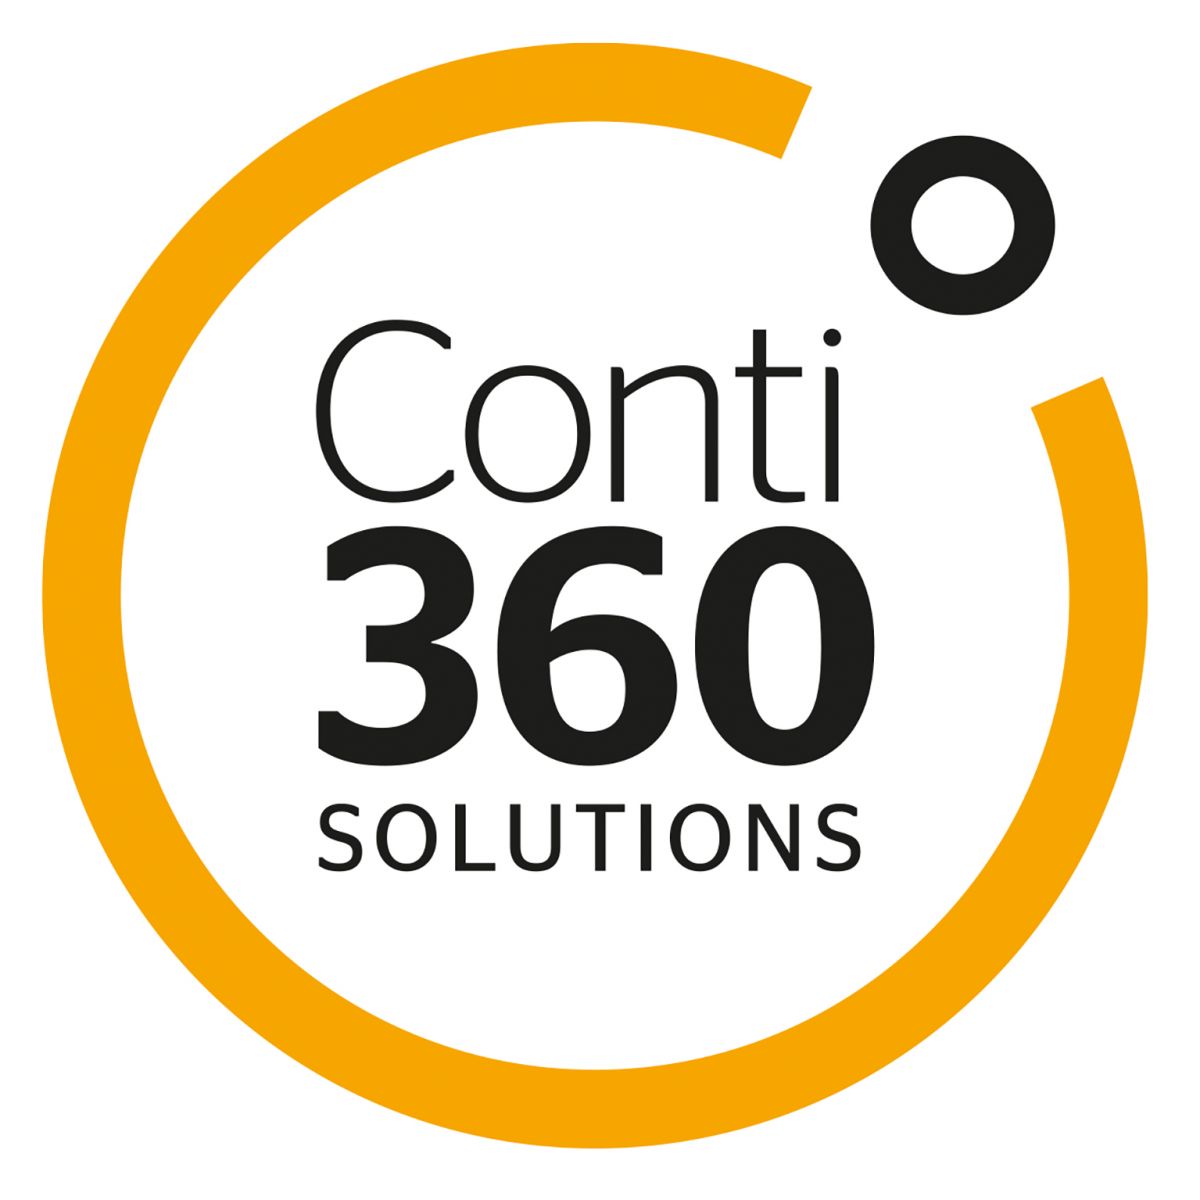 Continental vara Conti360° Solutions.